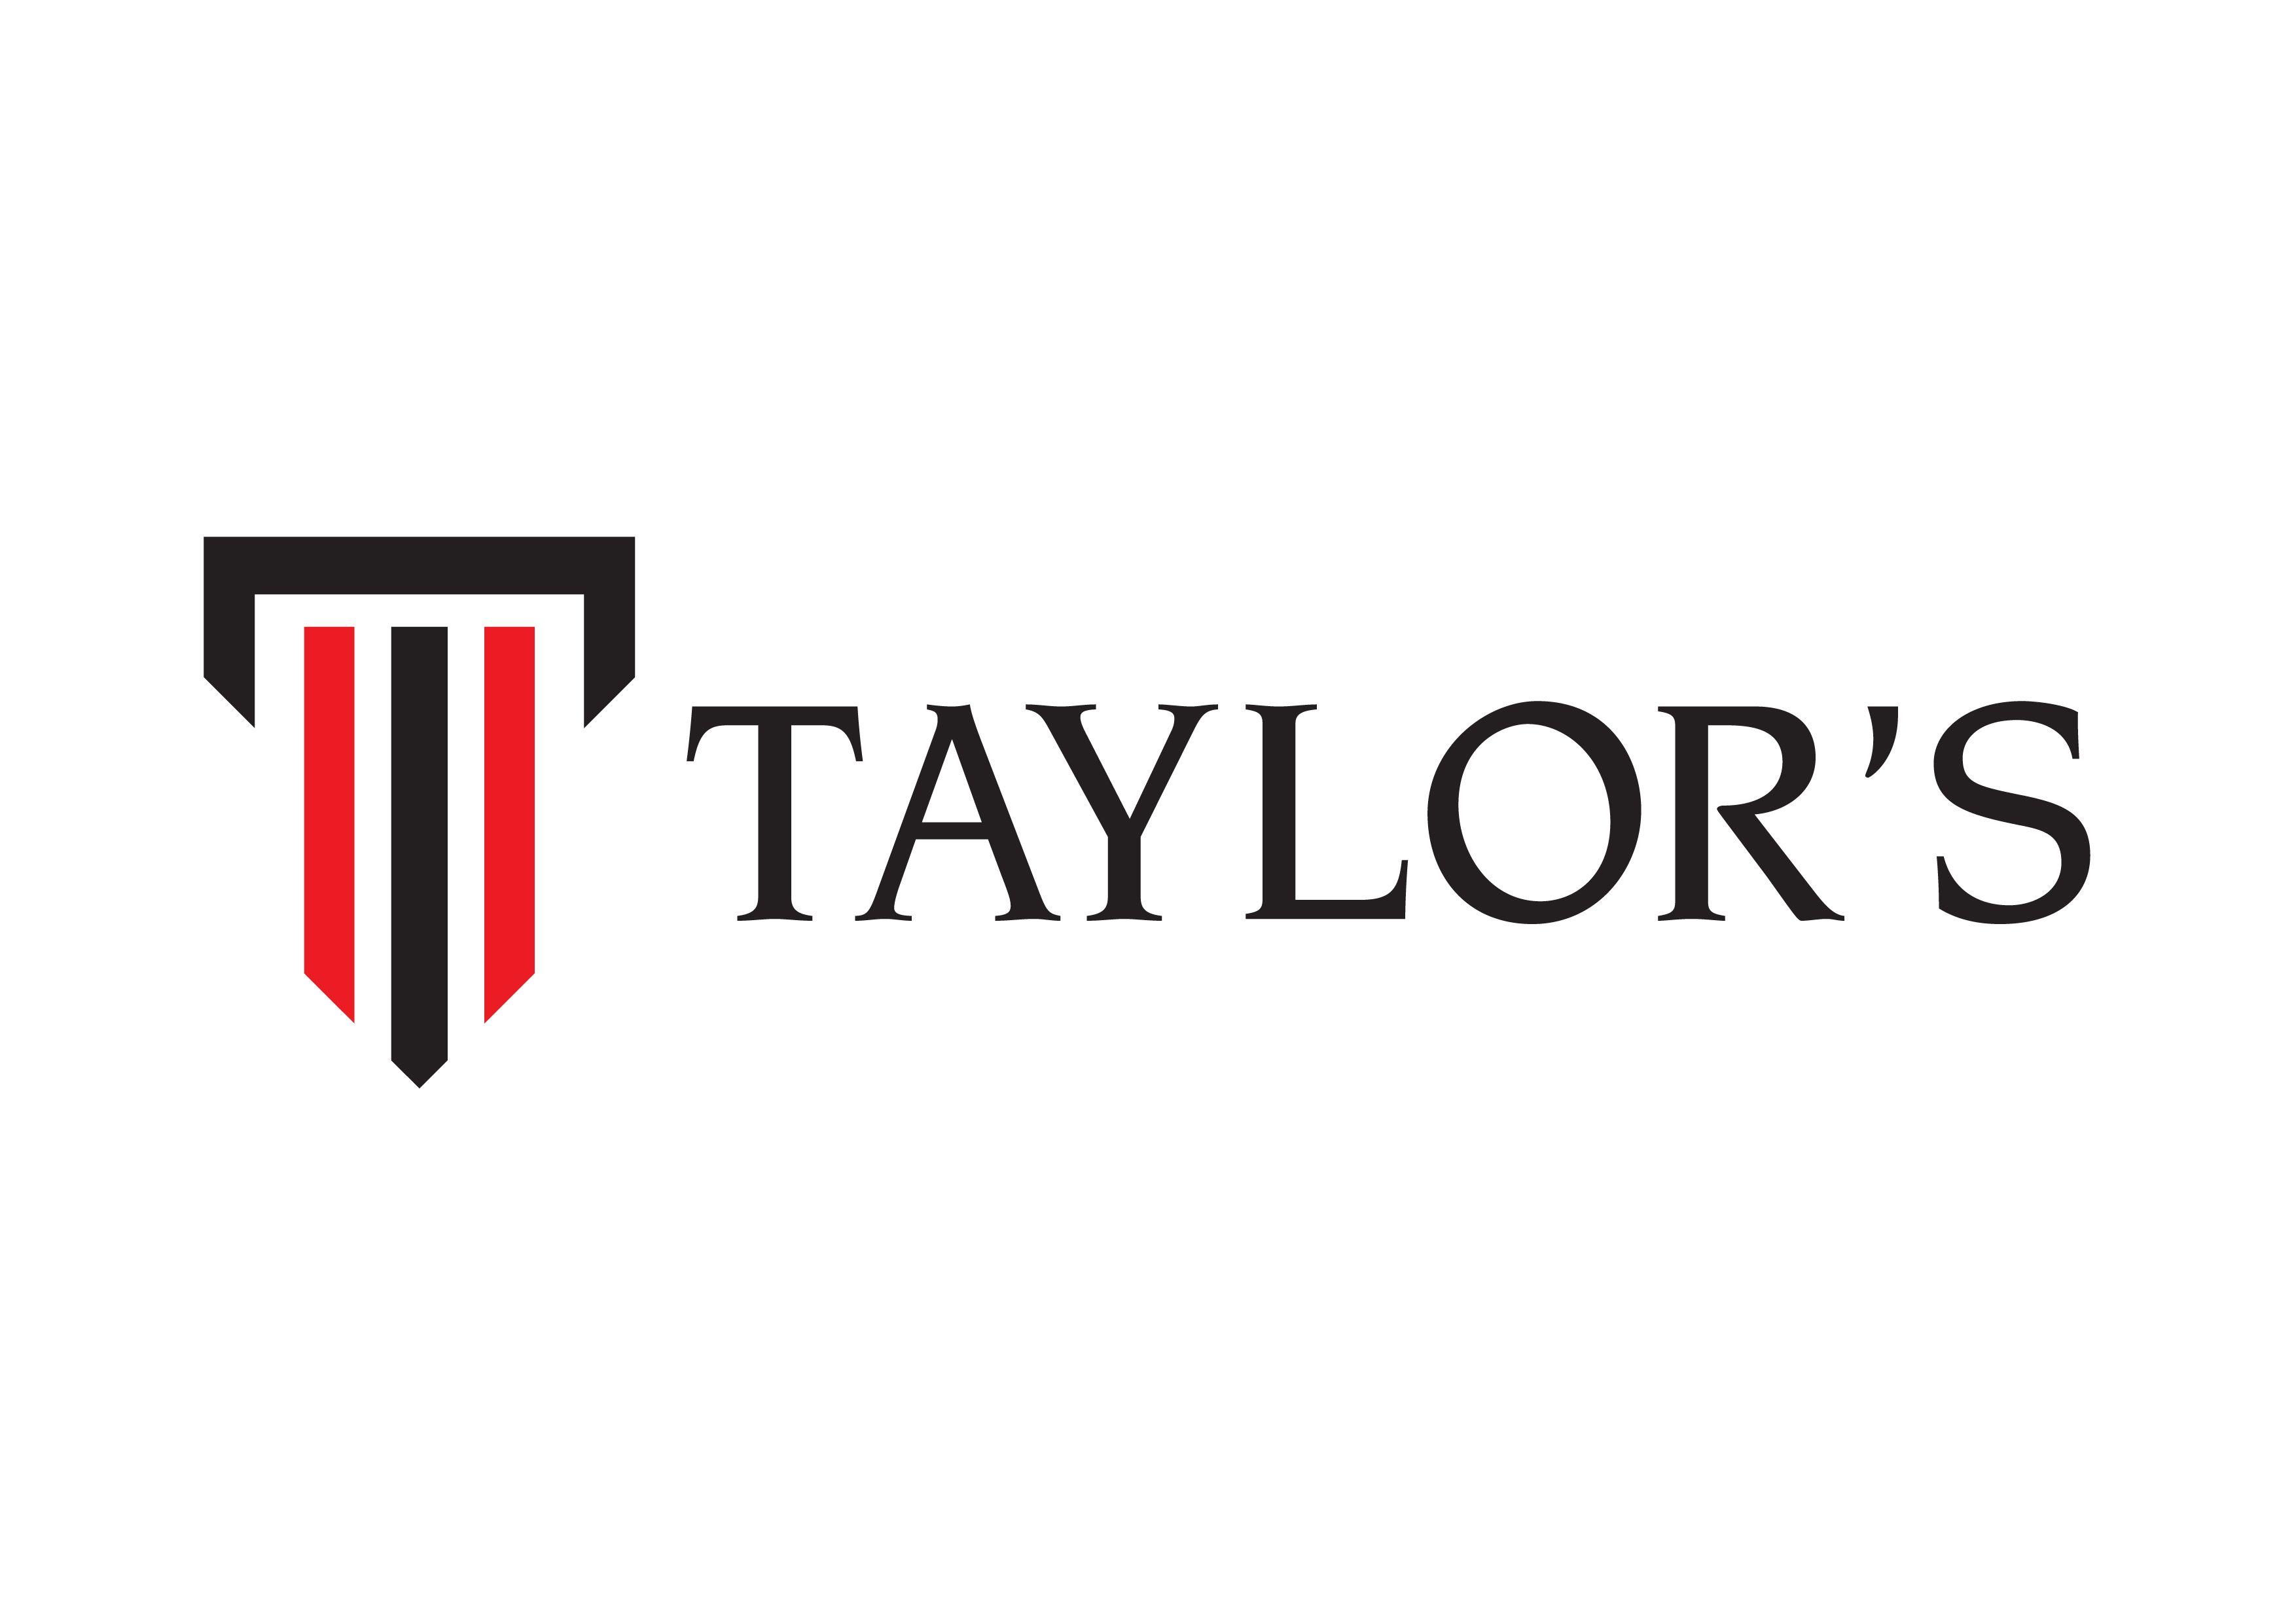 Google Taylor Logo - Logos | Taylor's Student Development